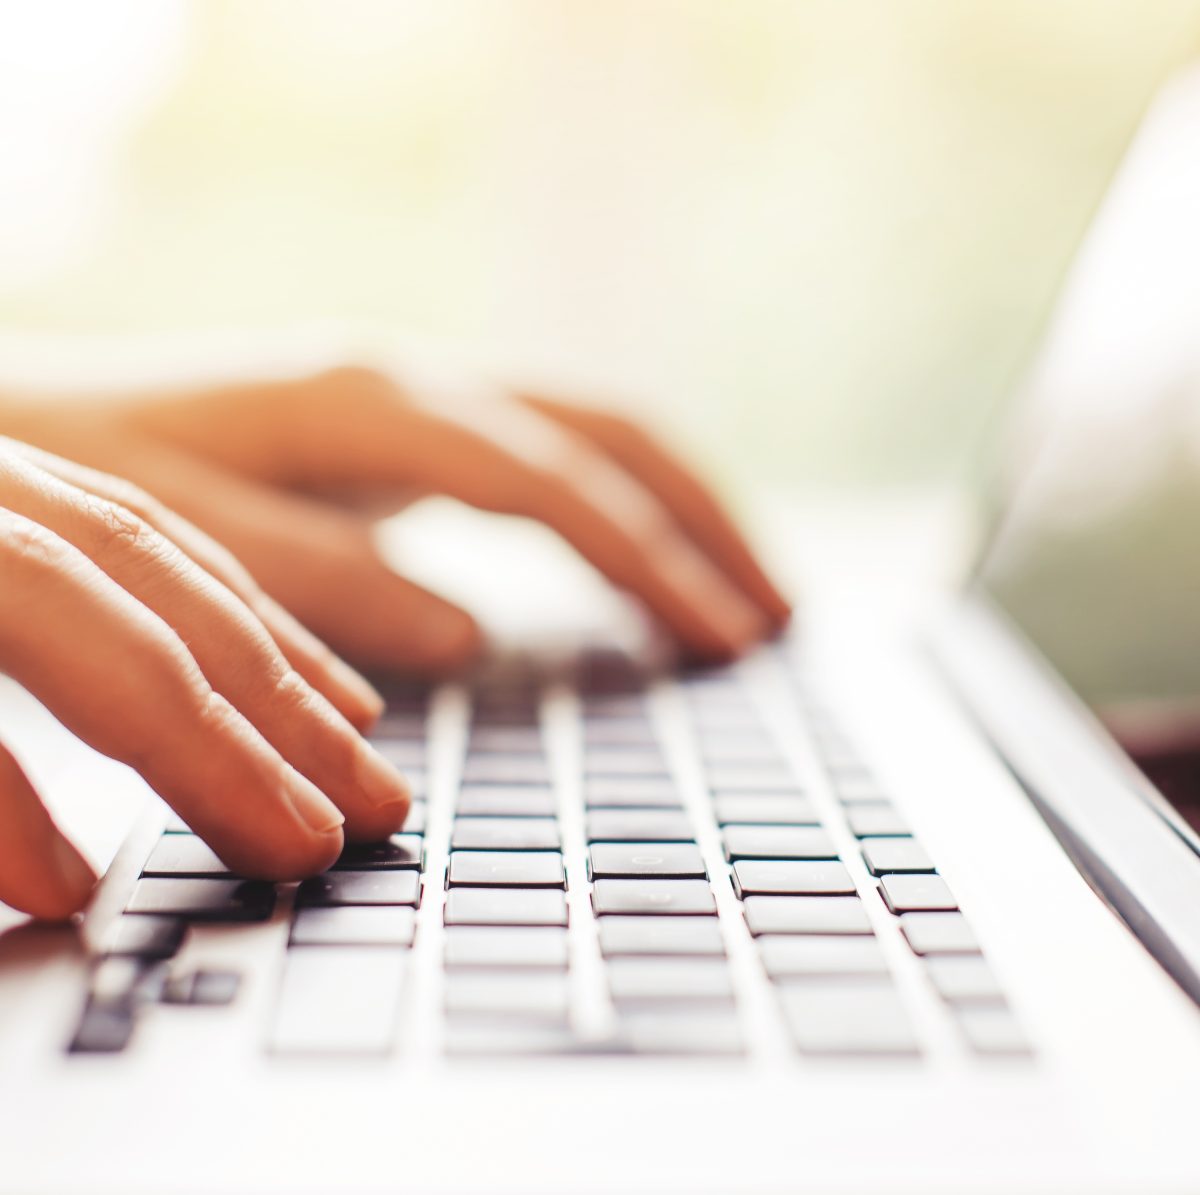 Hands over laptop keyboard, web design software on screen